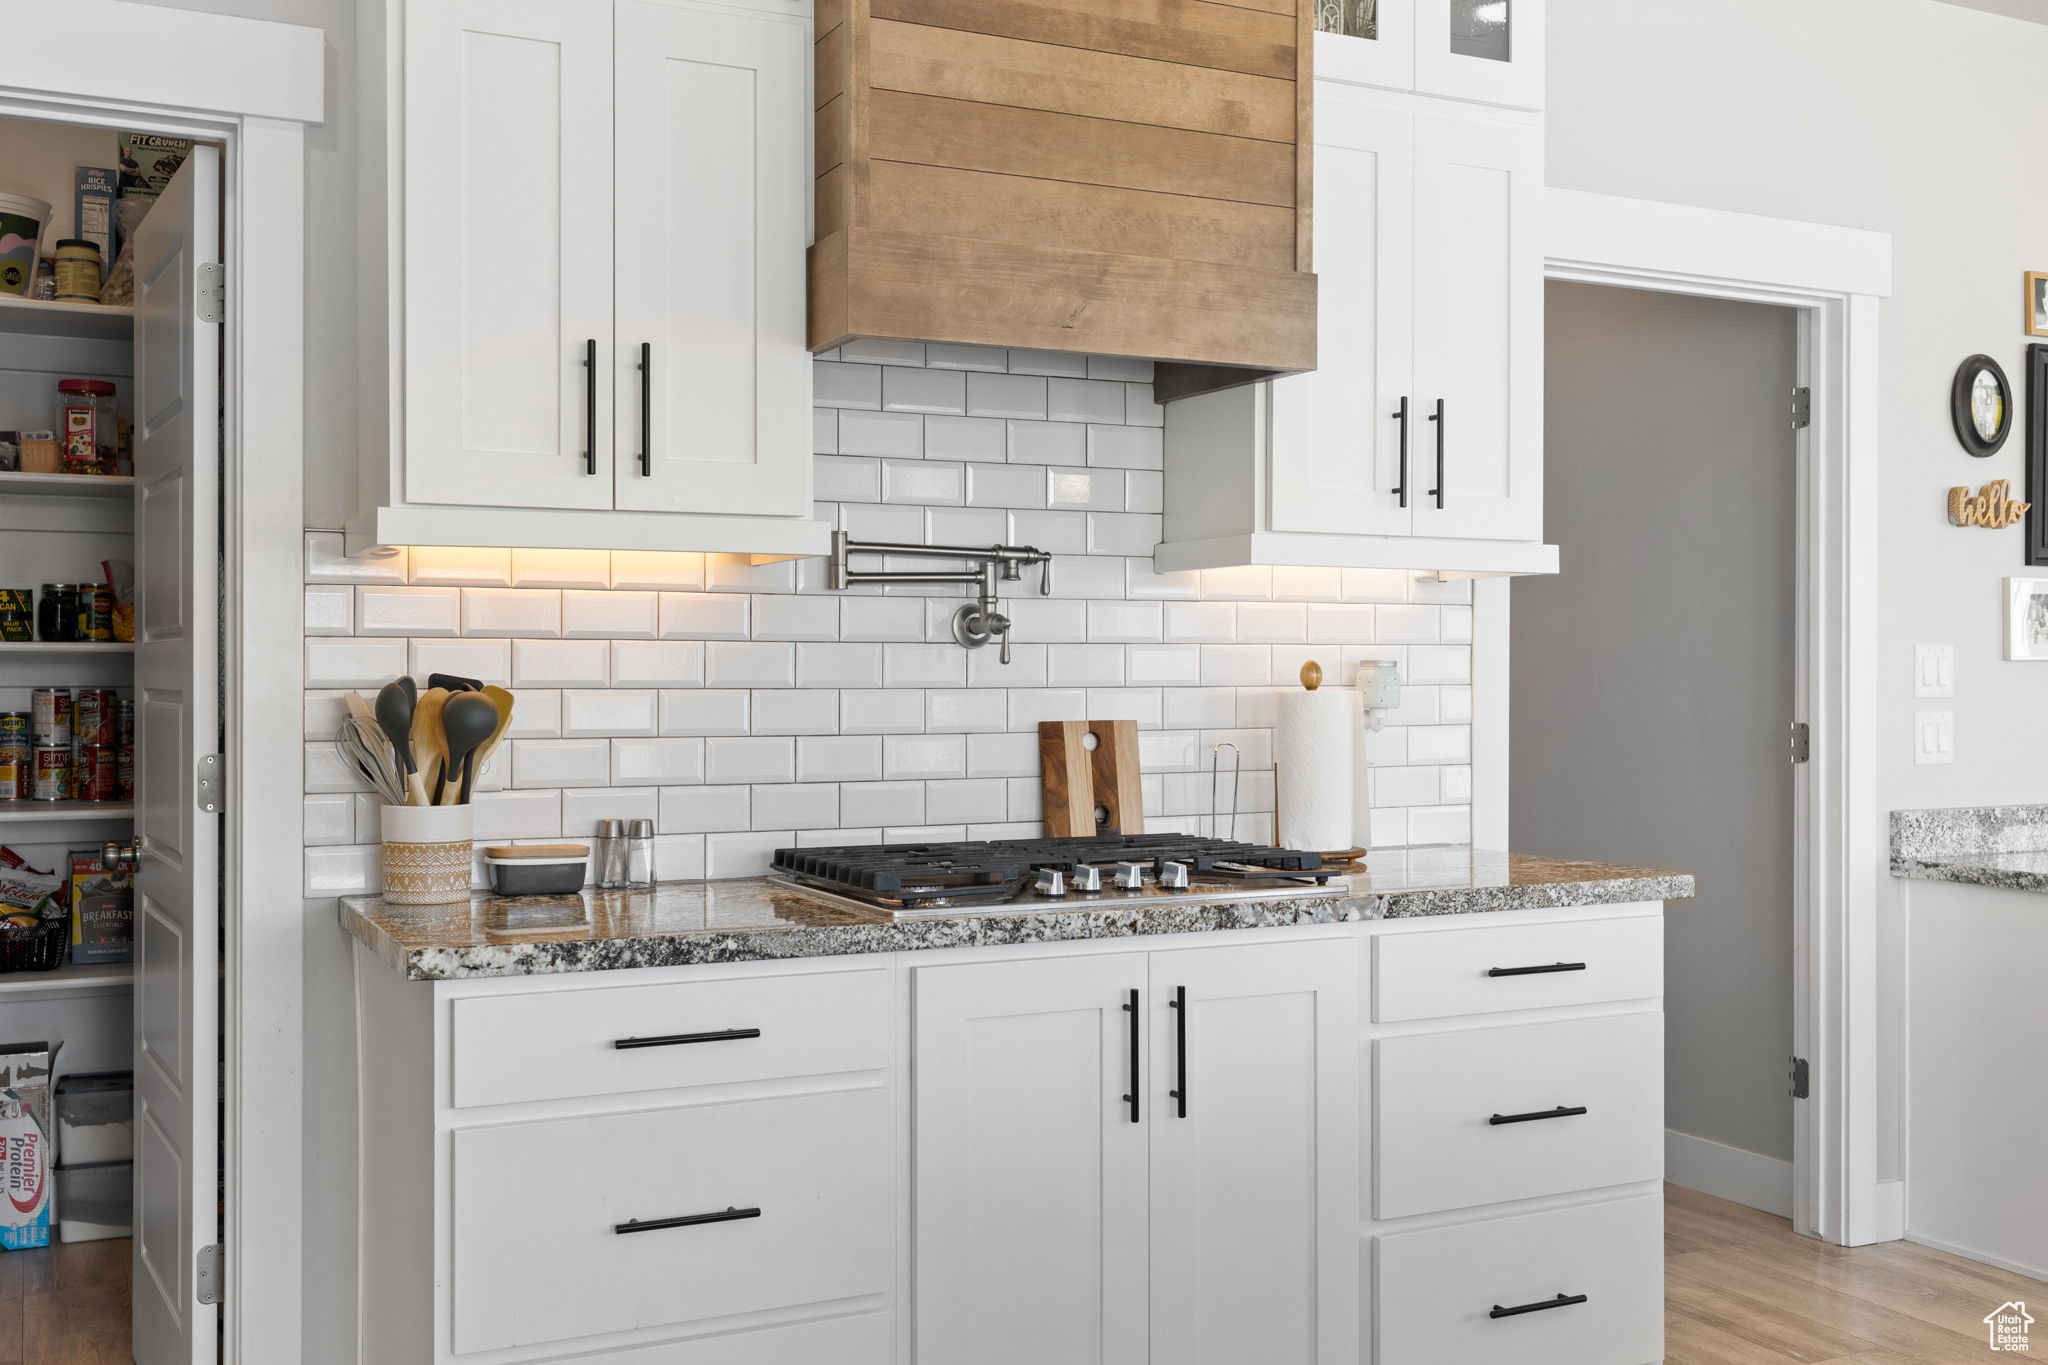 Kitchen featuring custom exhaust hood, backsplash, light wood-type flooring, white cabinetry, and light stone countertops